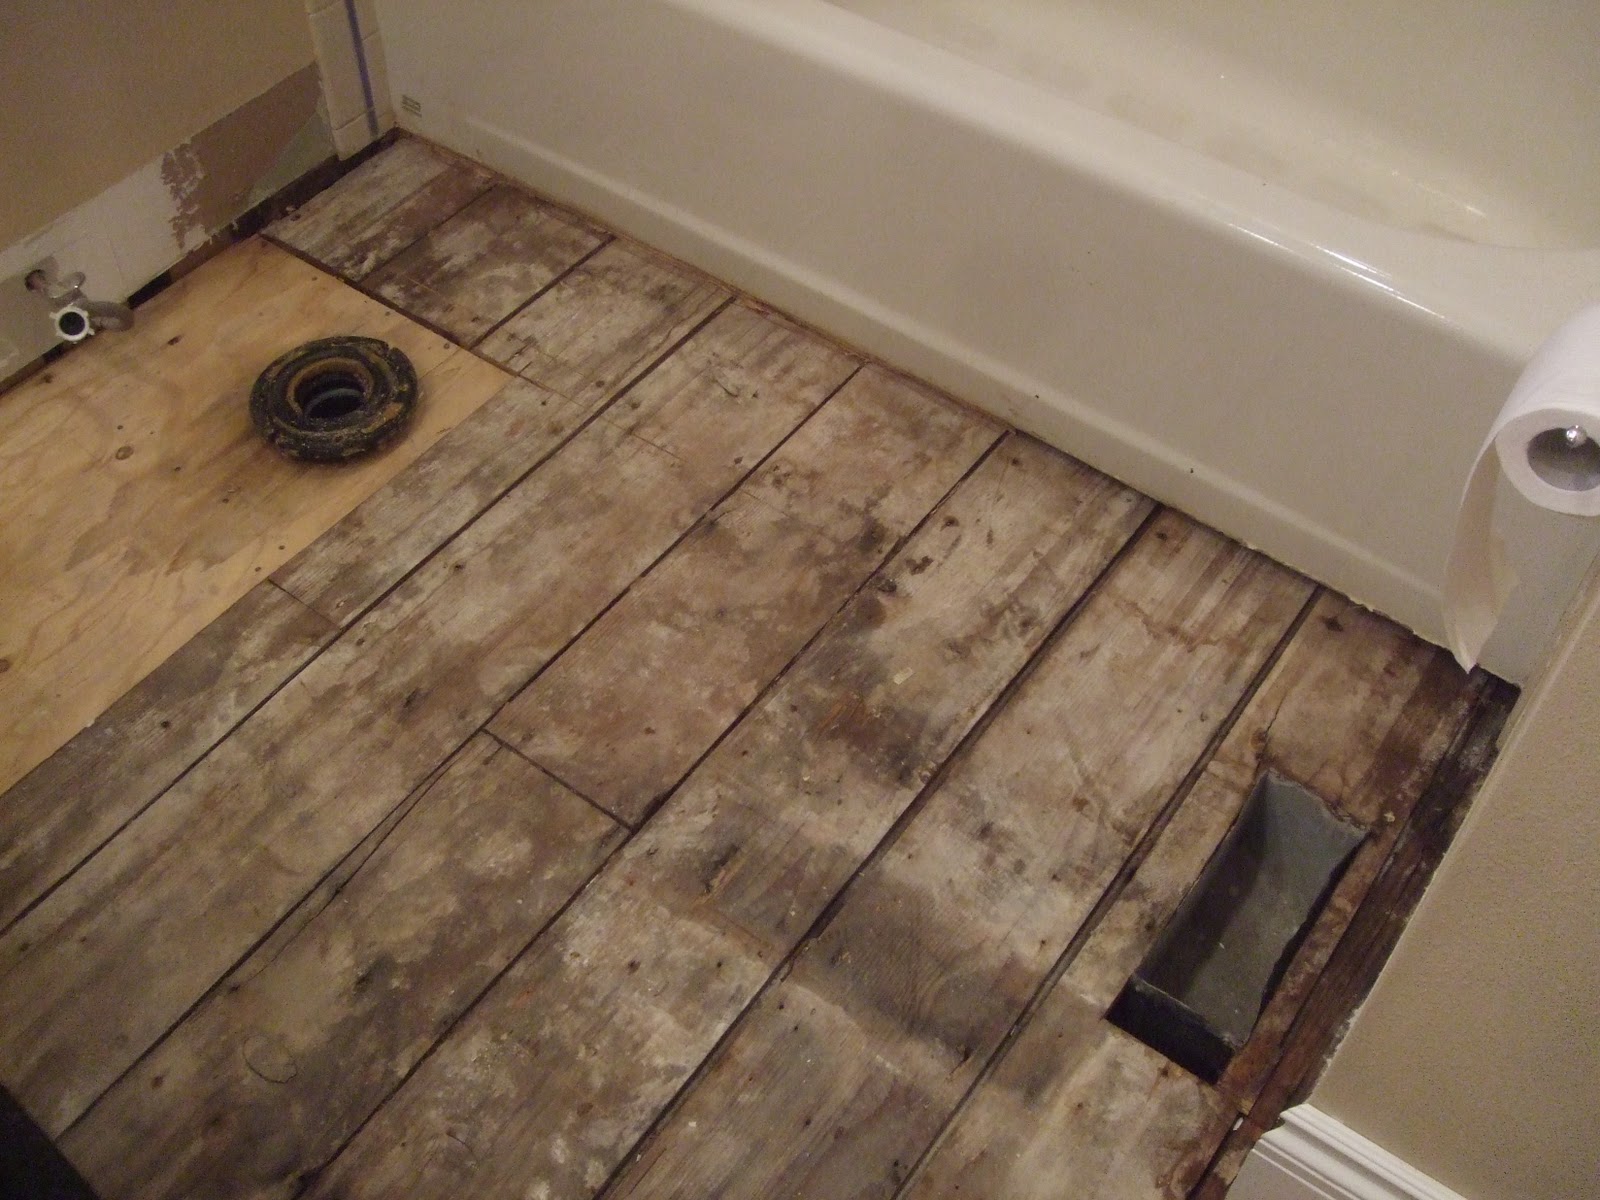 The Smiths: Laying bathroom wood flooring